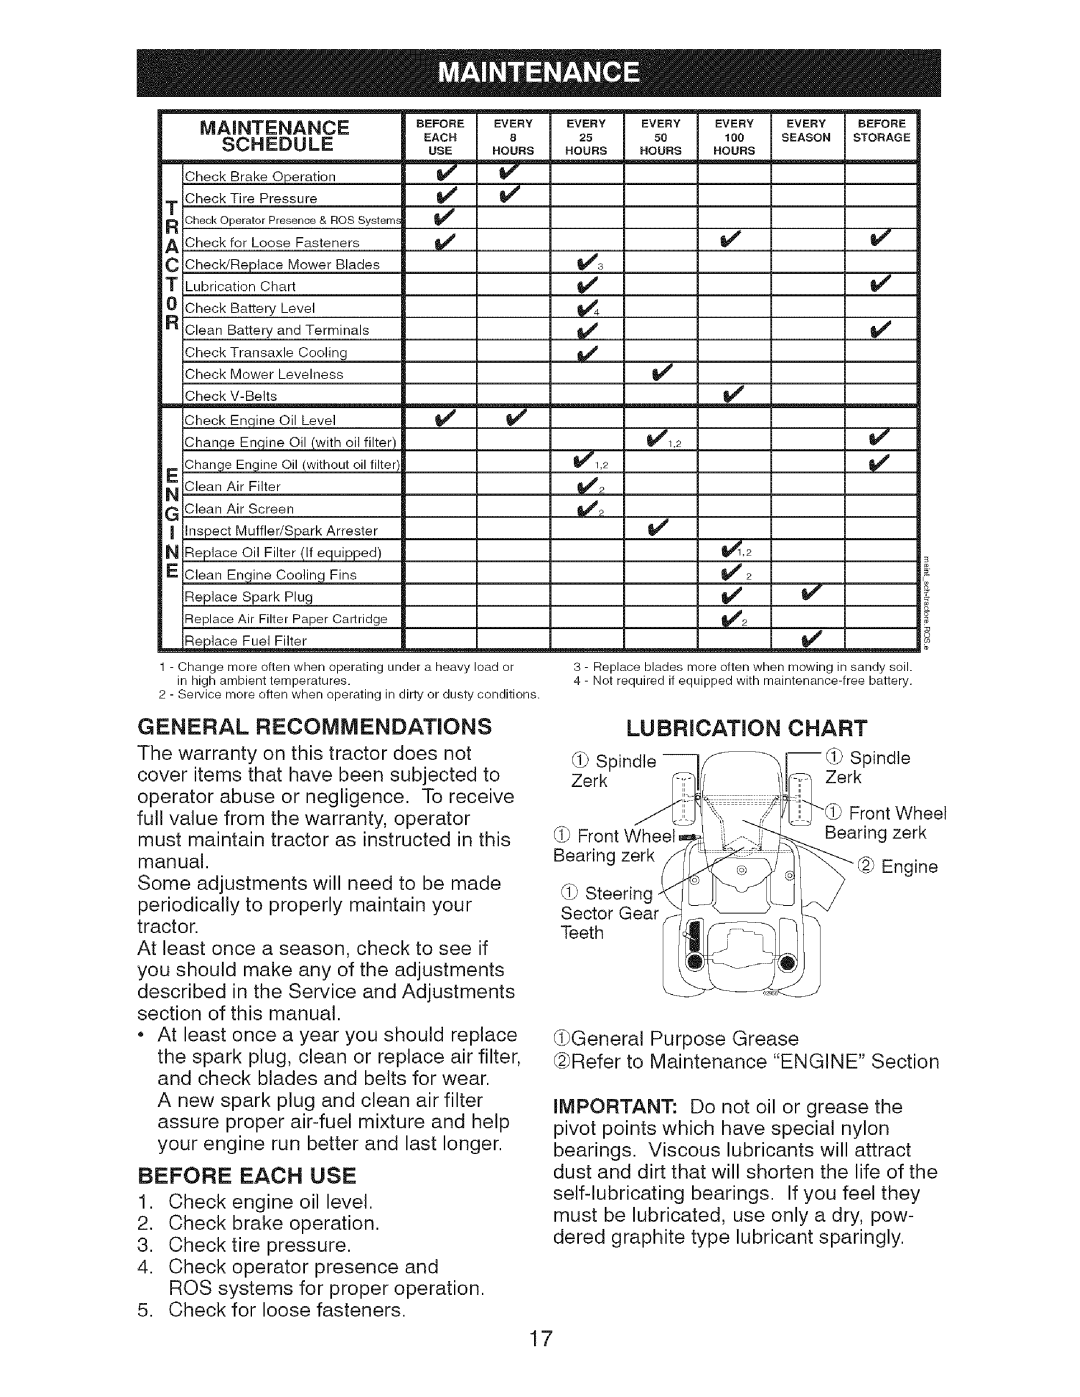 Craftsman 917.28726 owner manual V2 V if v, Before Each Use, Lubrication, Chart, Maintenance, General Recommendations 